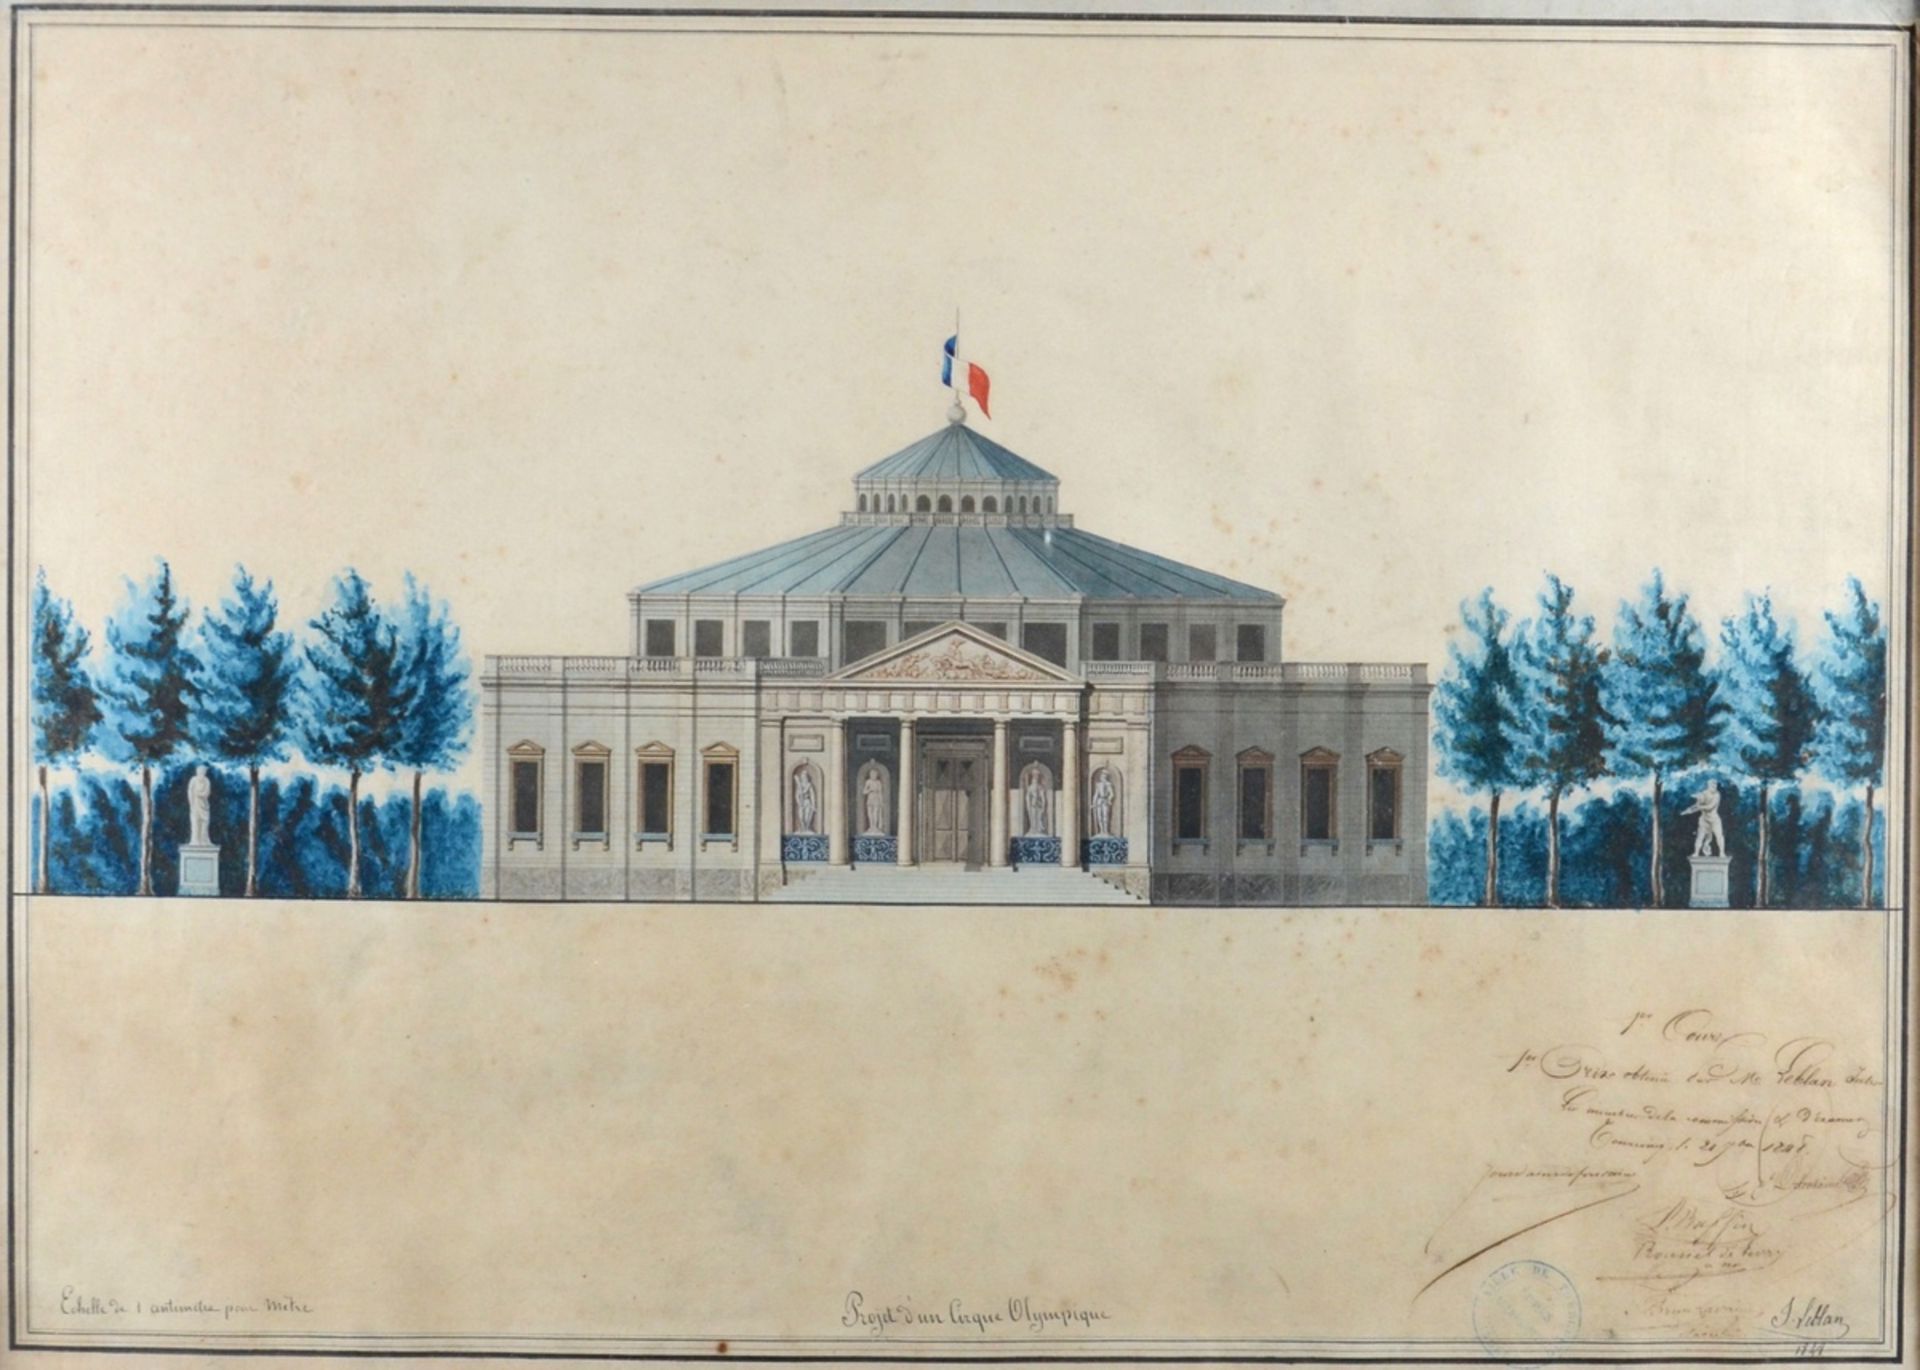 J. Leblan 1848: Architectural drawing 'Cirque Olympique' (67x48cm) (*)